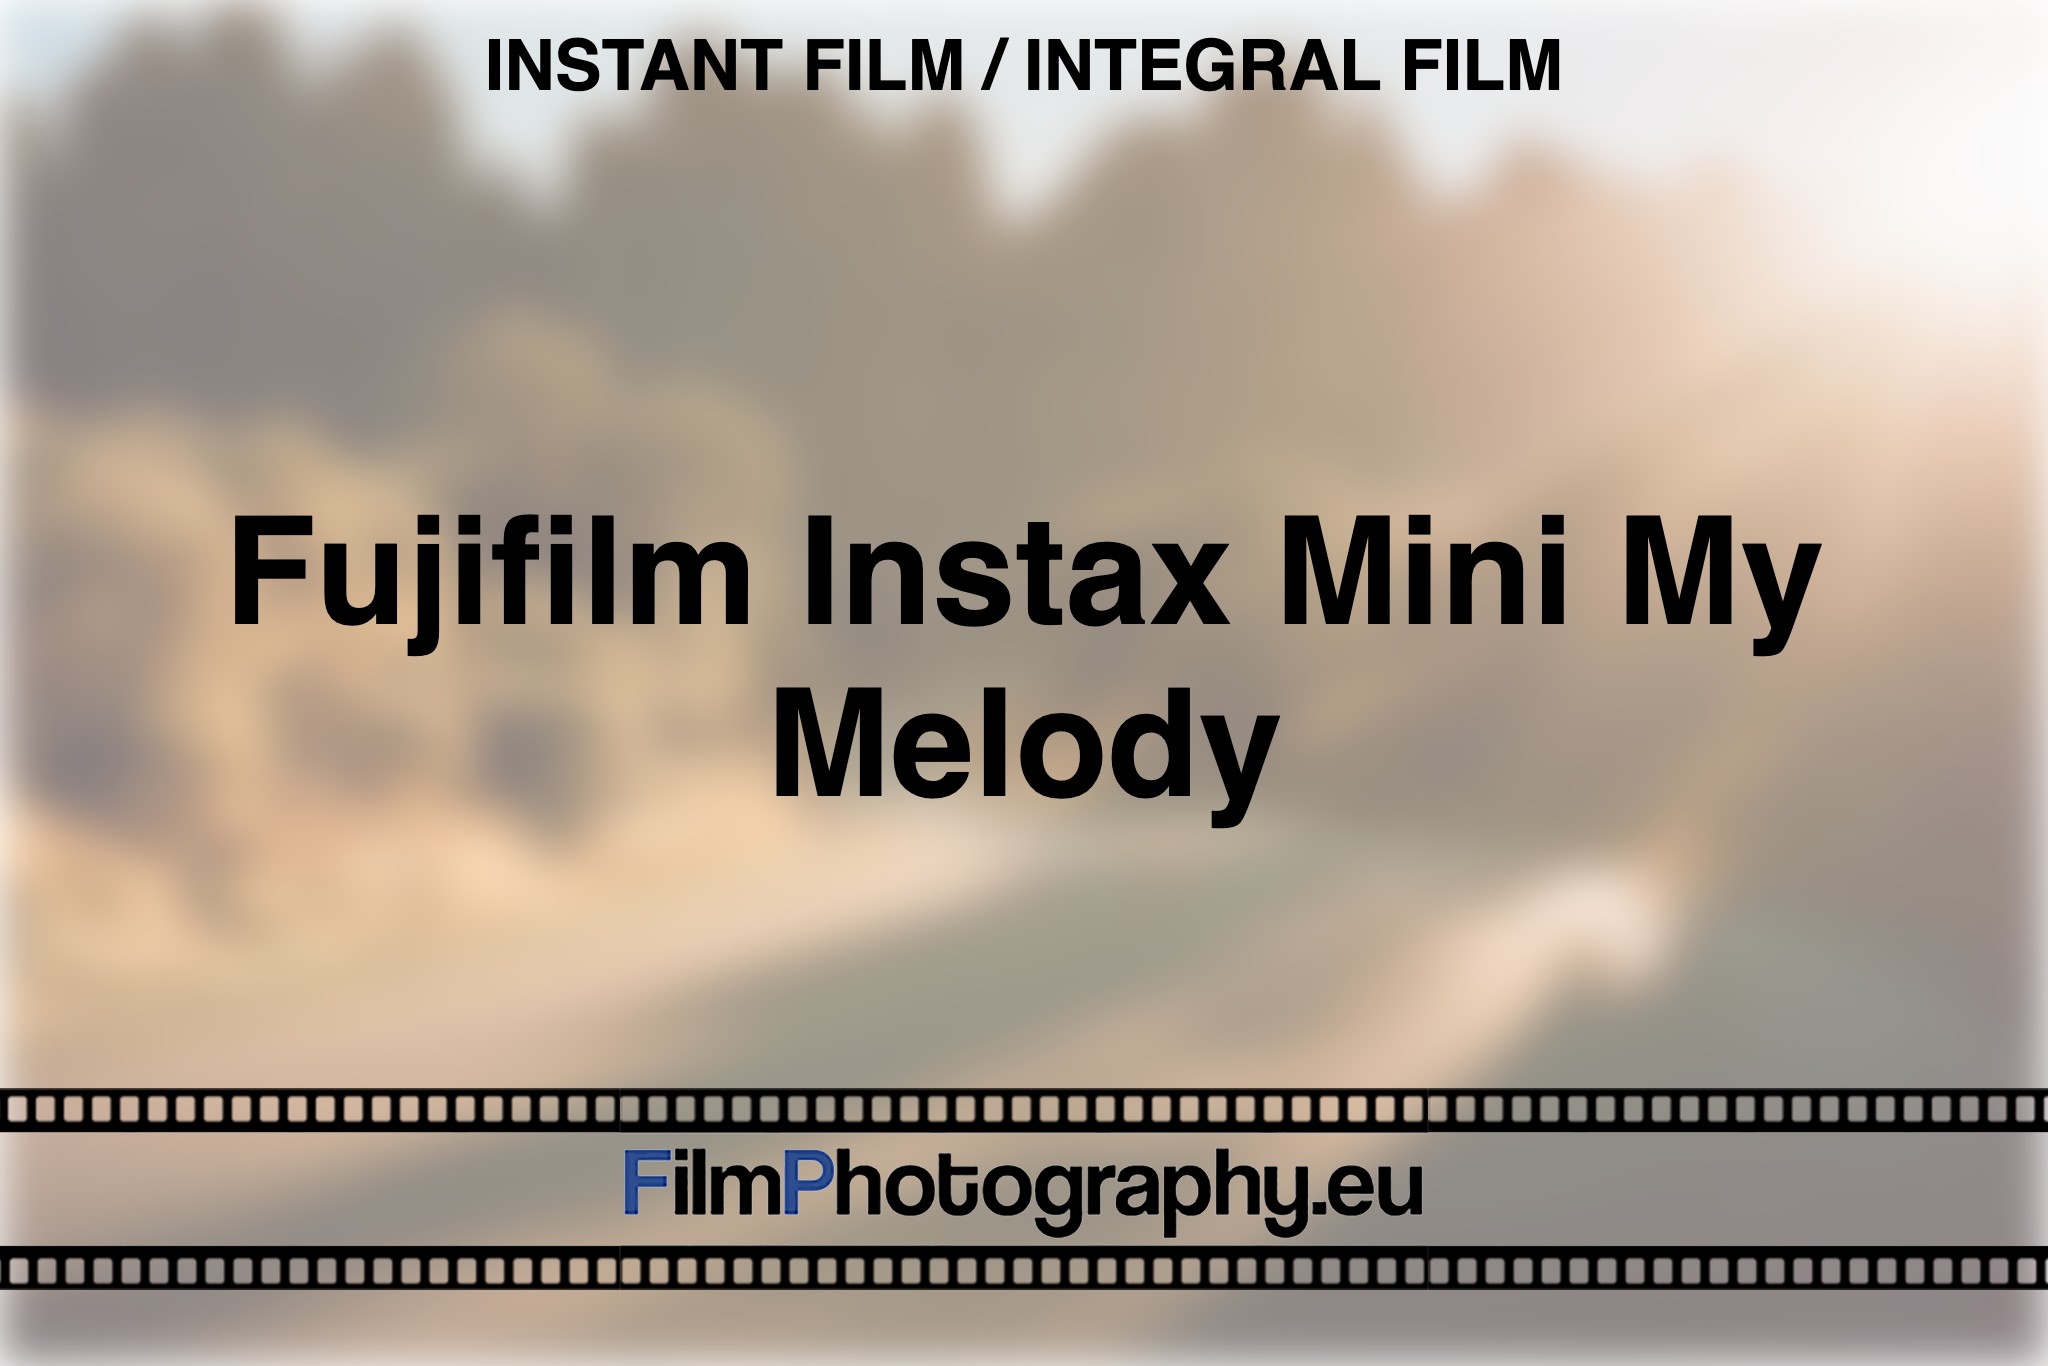 fujifilm-instax-mini-my-melody-instant-film-integral-film-bnv